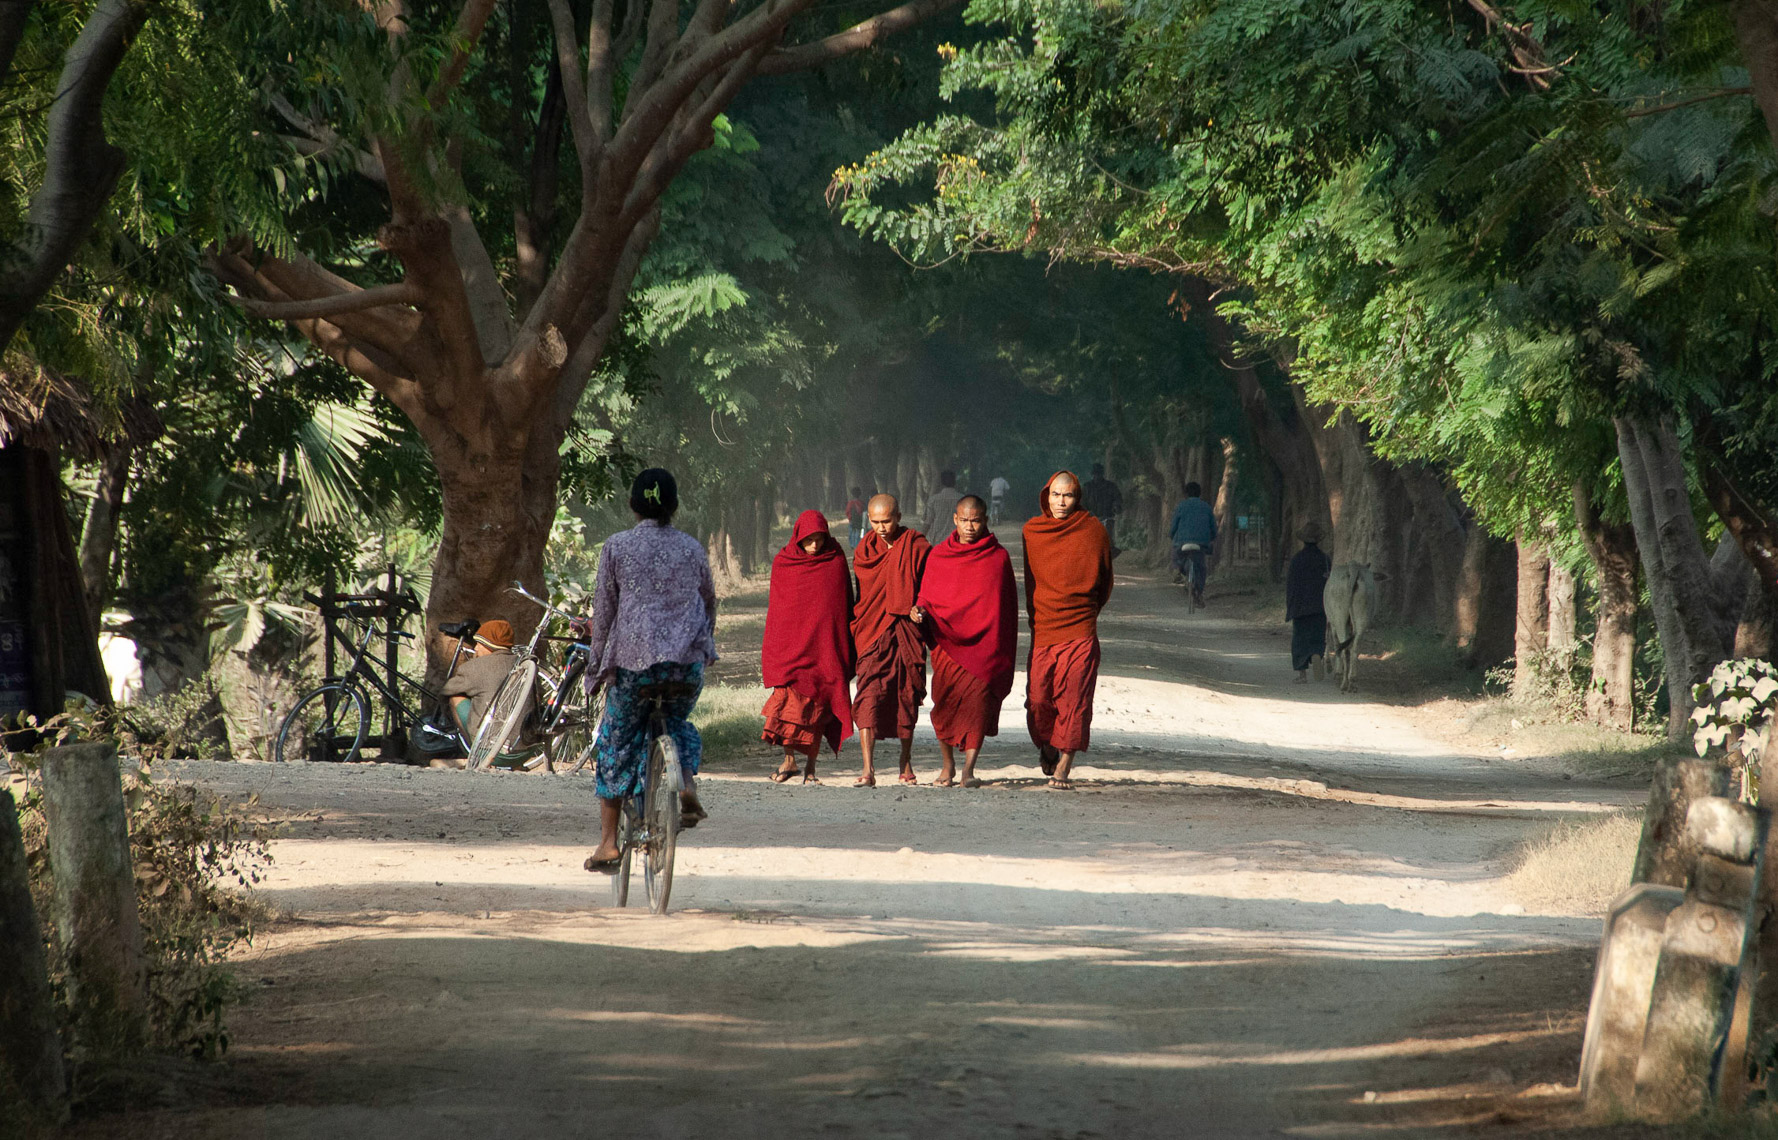 TP_1-92  Monks on a Mission.  Myanmar